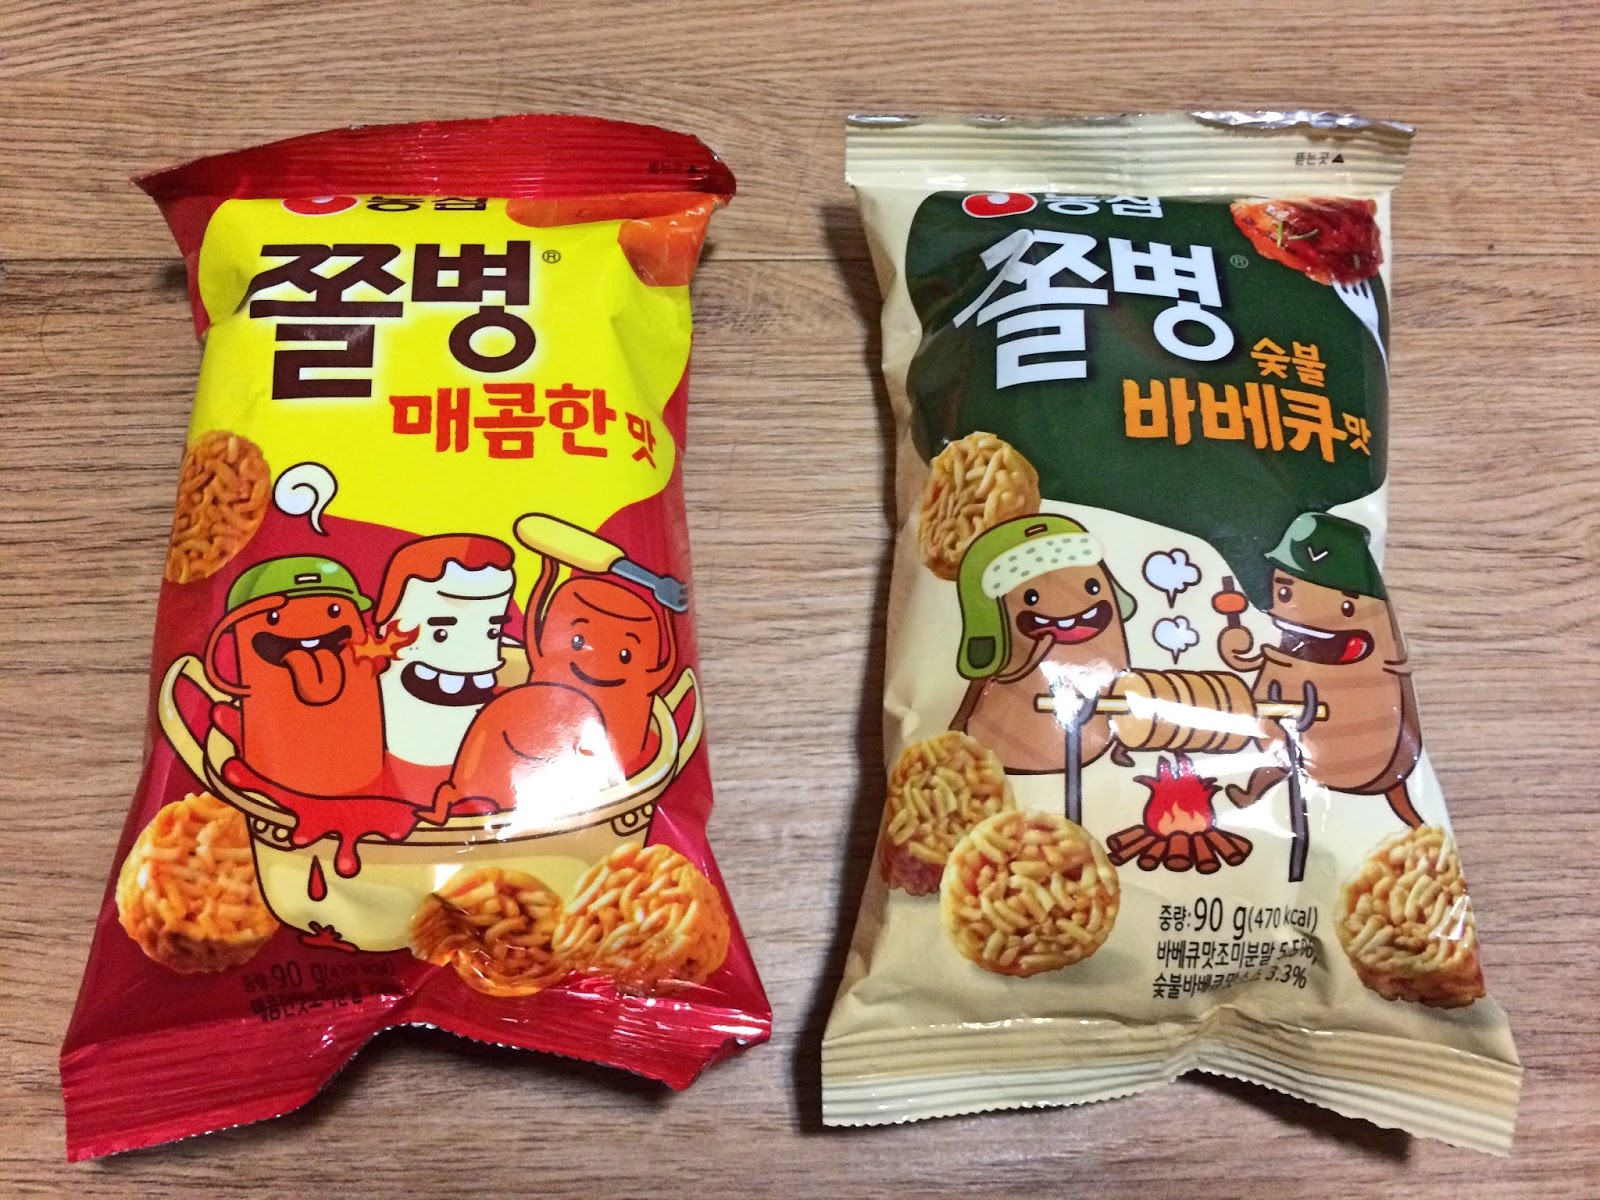 [Snack Attack - Korea] Bite-sized Ramen Snacks 쫄병 (2 flavors!)